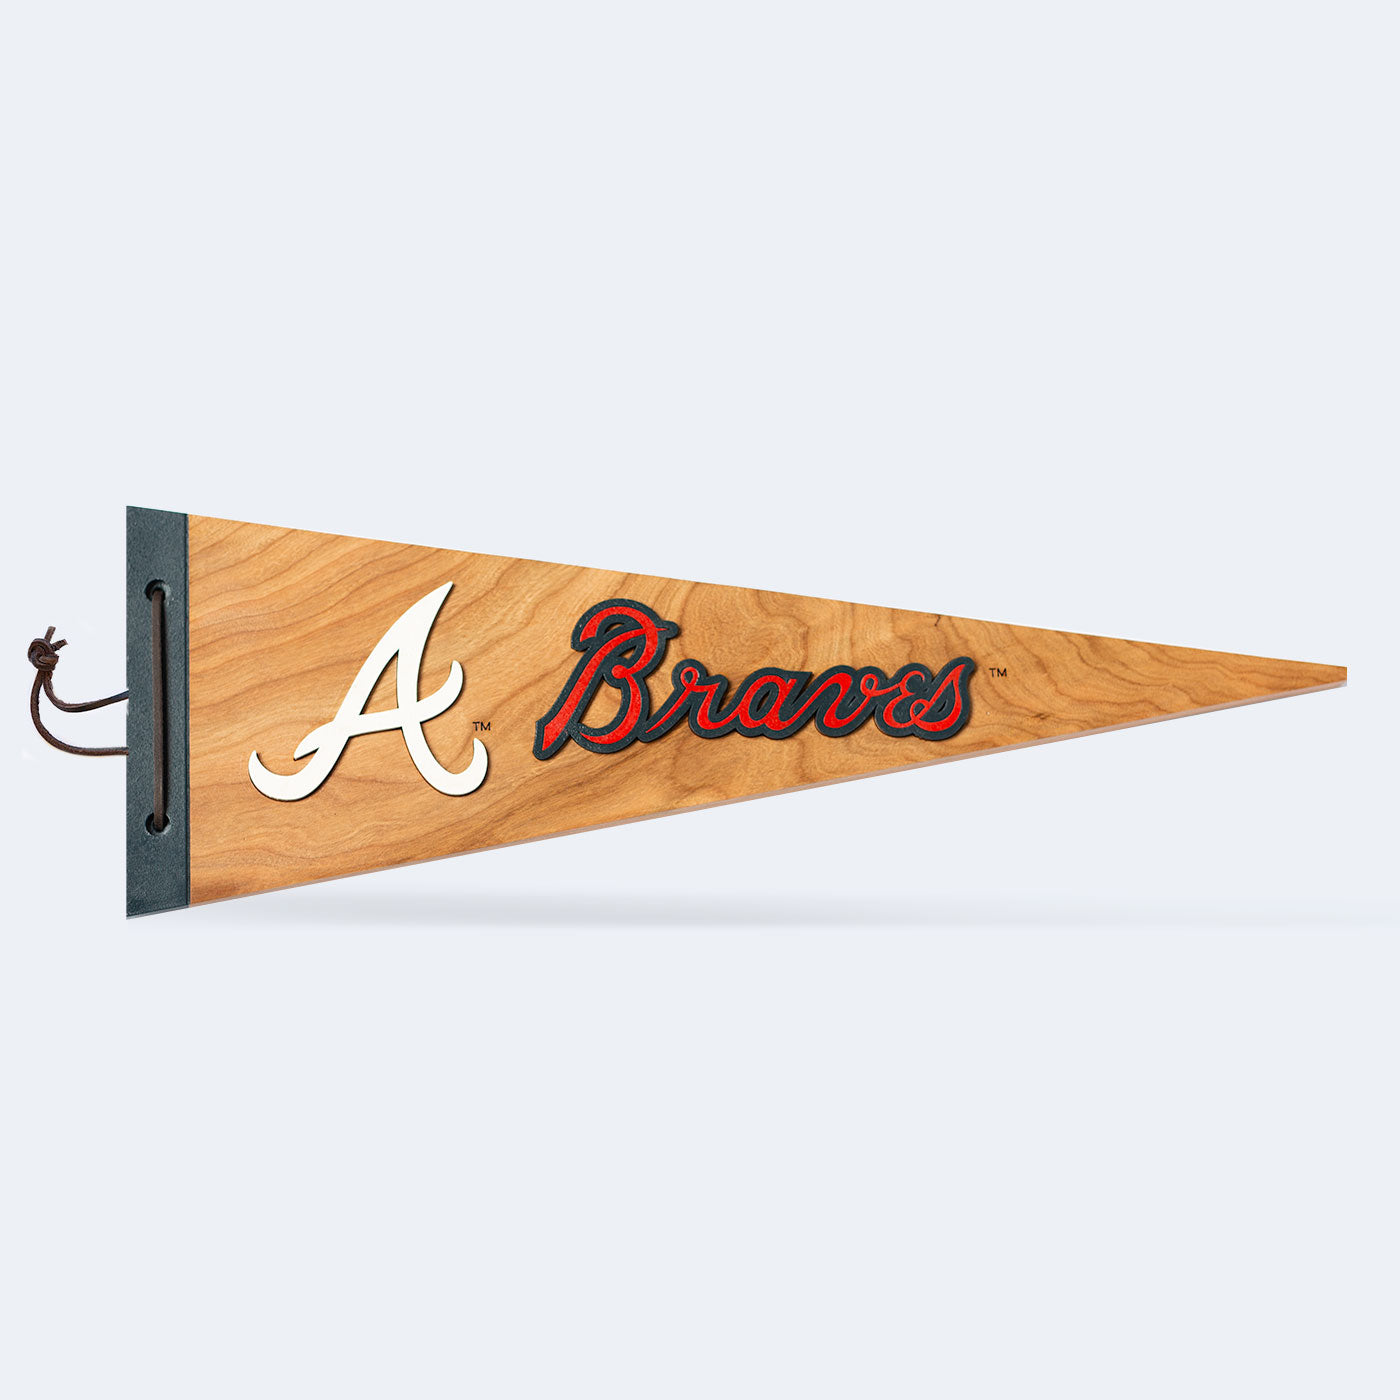 Atlanta Braves Team Logo 3D model